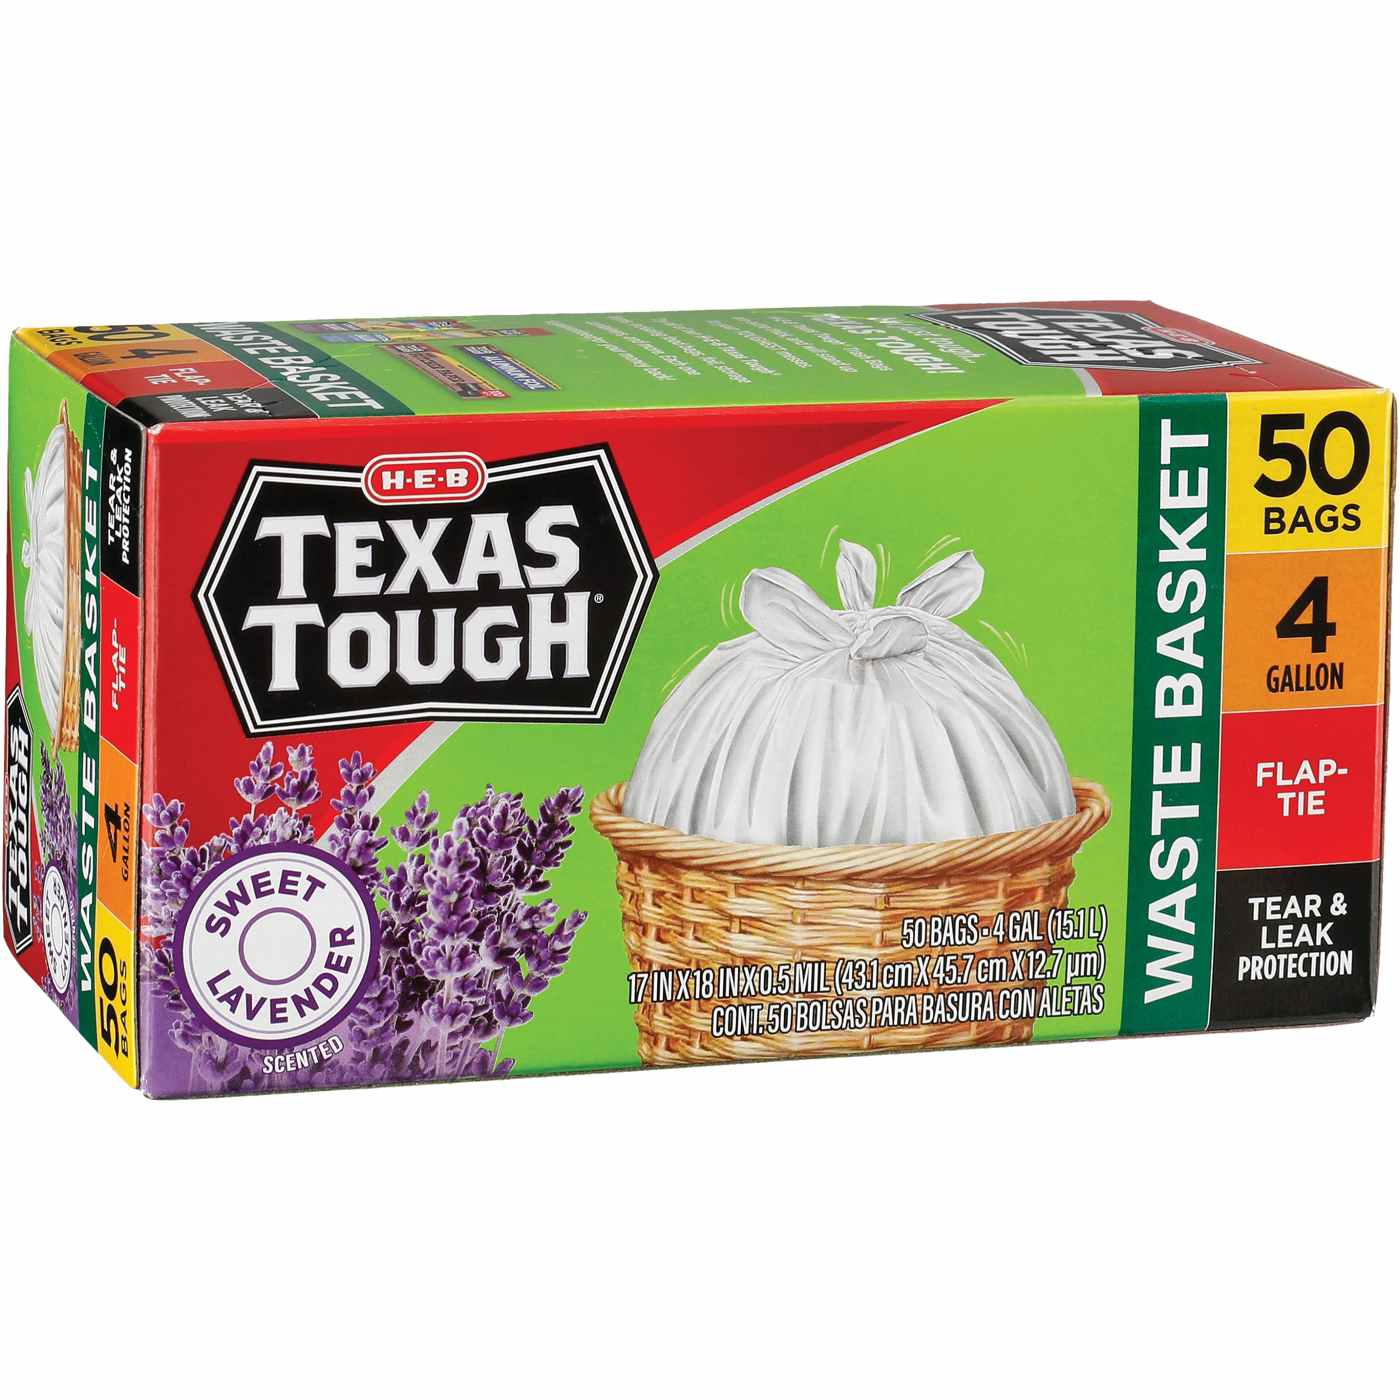 H-E-B Texas Tough Flap Tie Waste Basket Trash Bags, 4 Gallon - Sweet  Lavender Scent - Shop Trash Bags at H-E-B